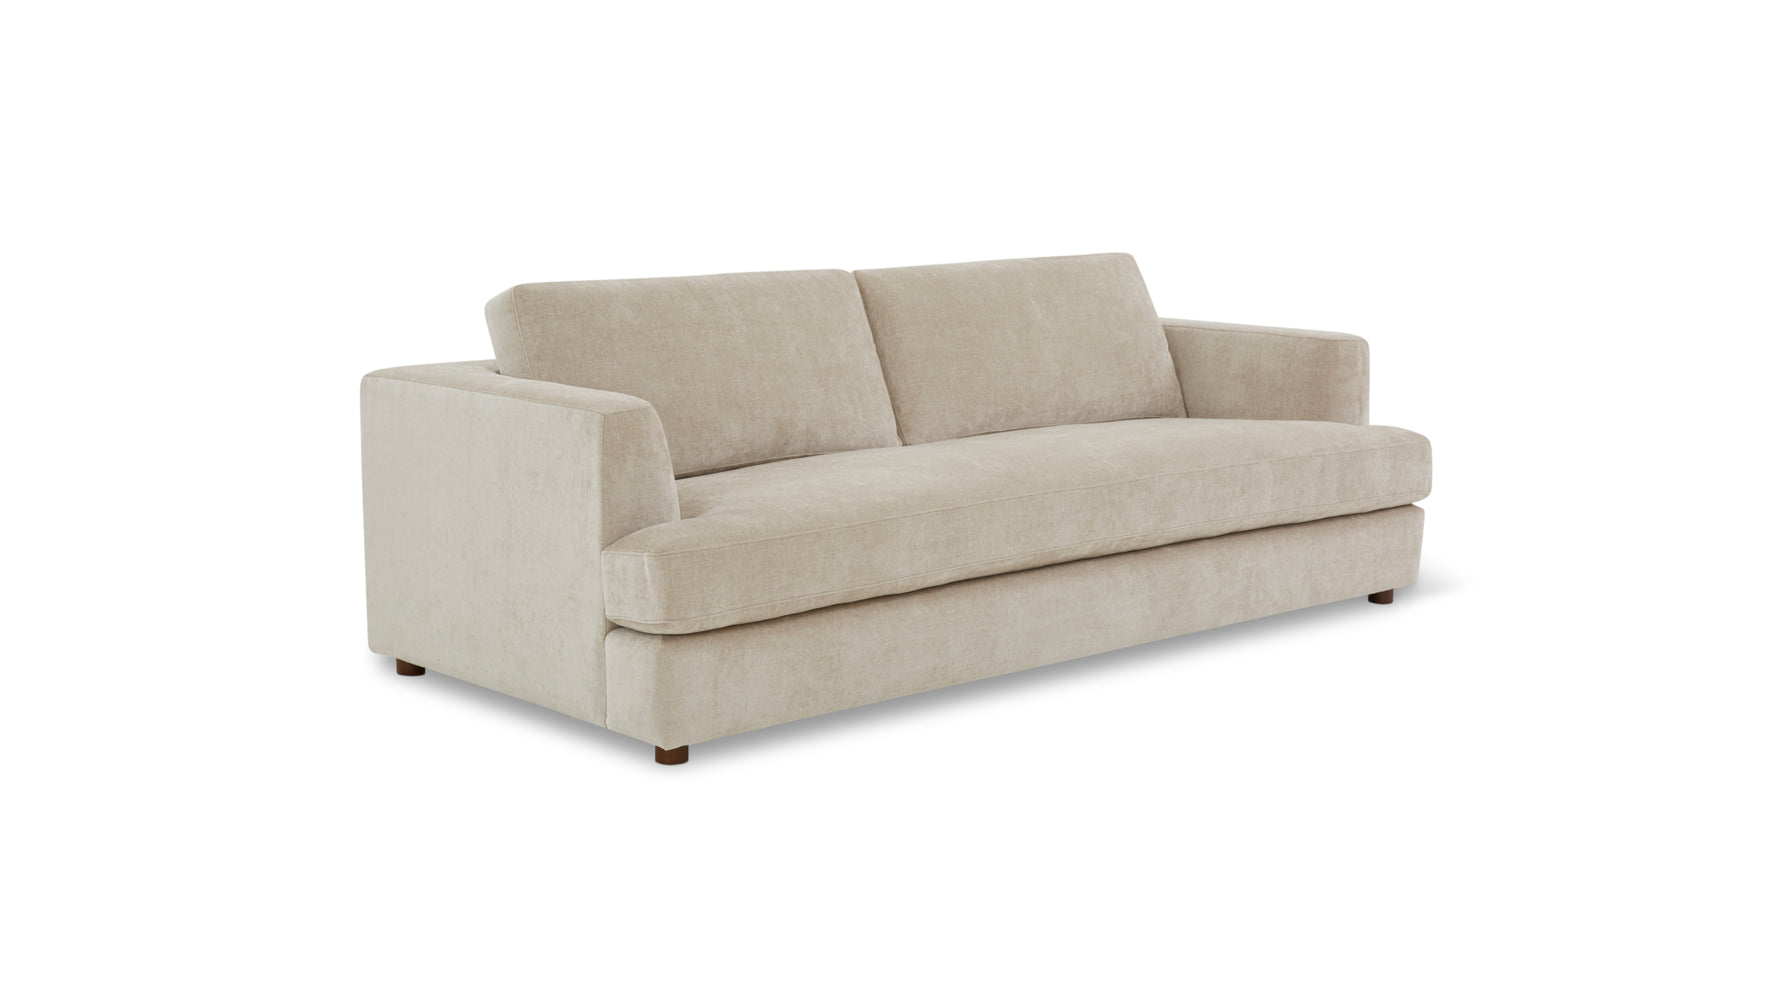 Good Company Sofa, 3 Seater, Cashew - Image 2